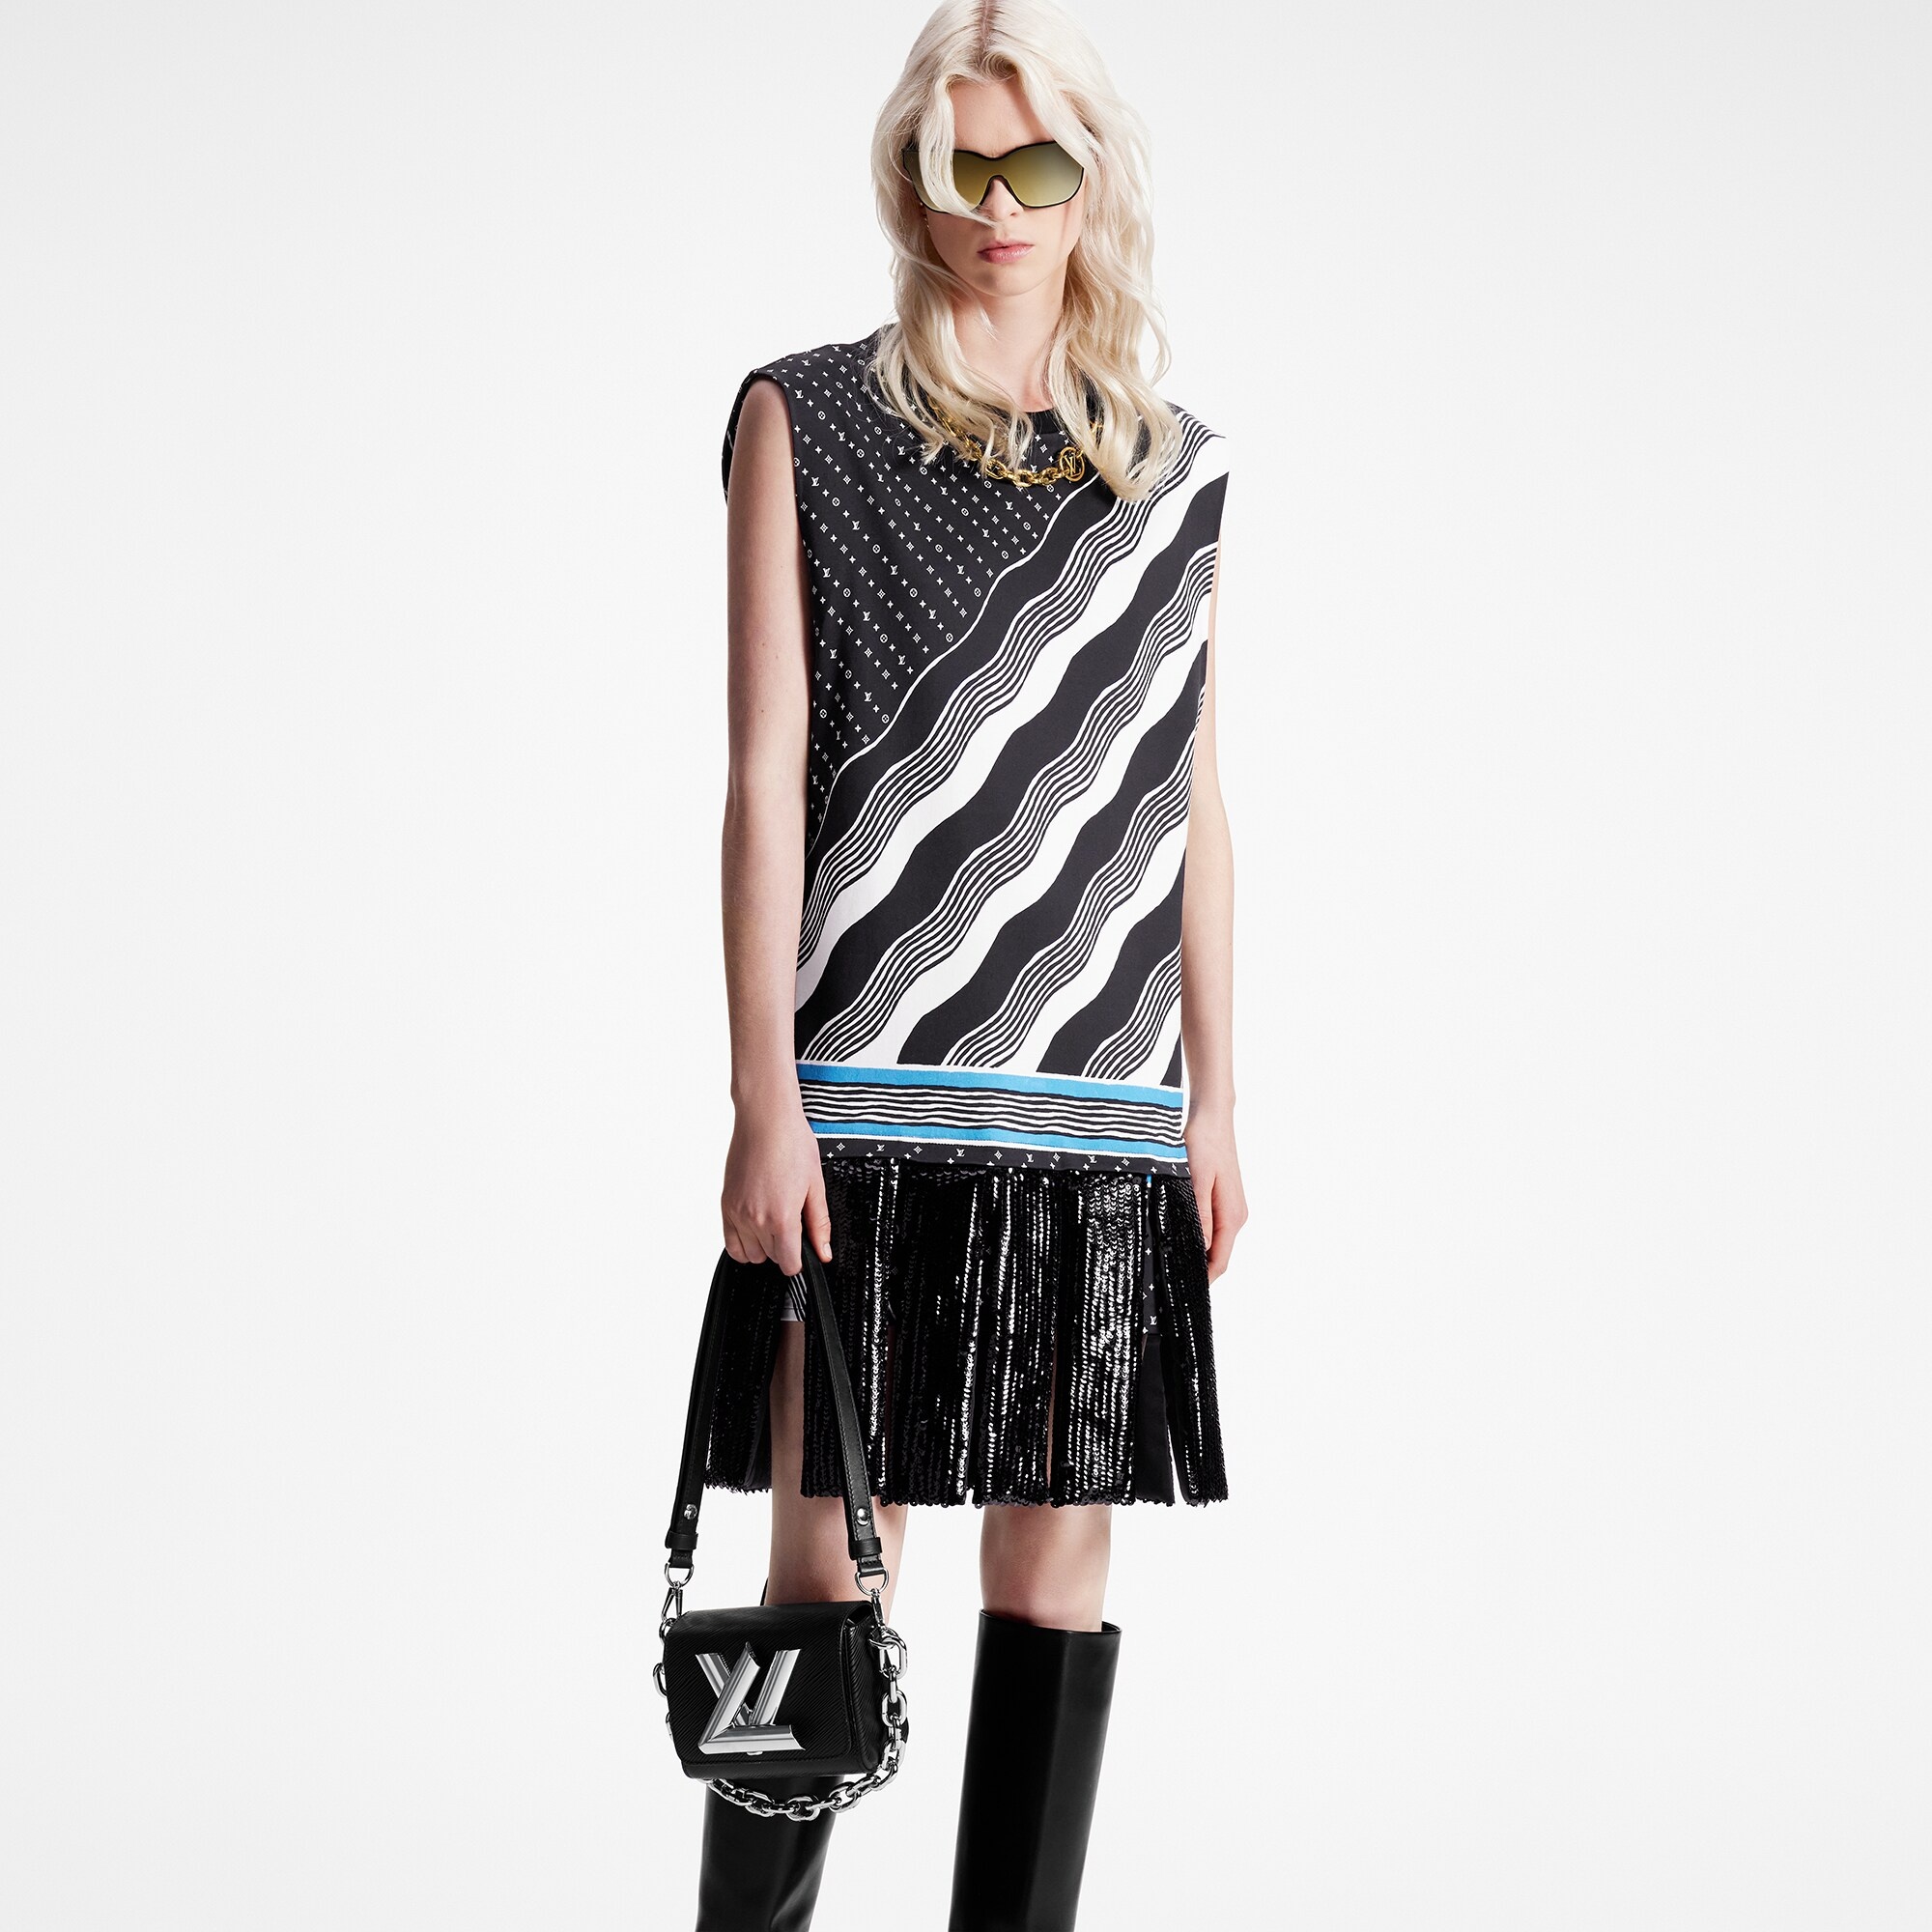 Louis Vuitton Monogram Shirt Dress